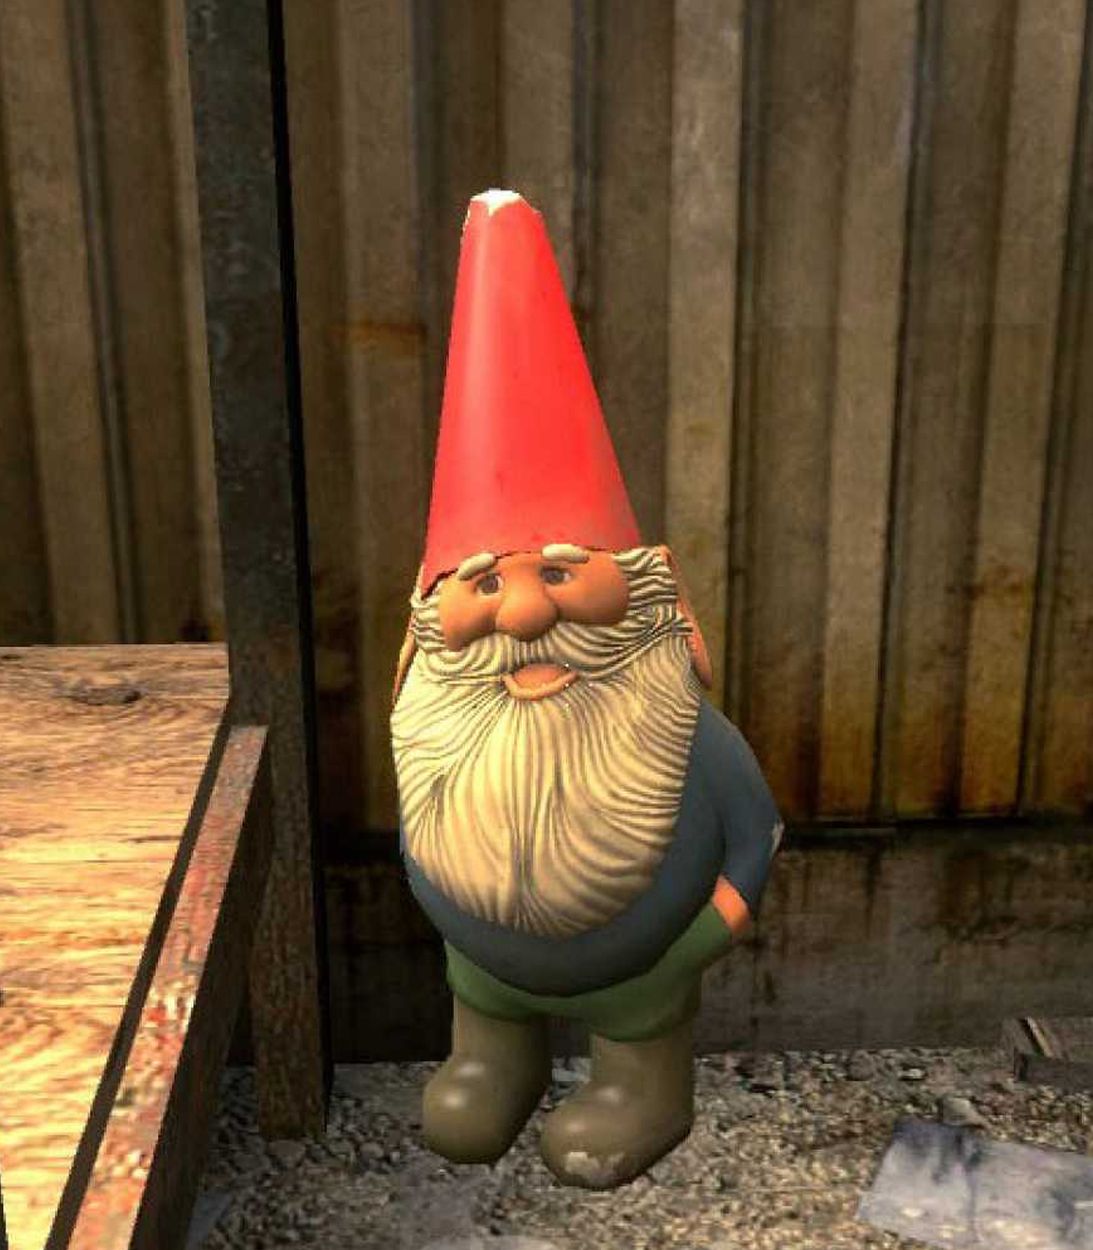 Gnome Chompski